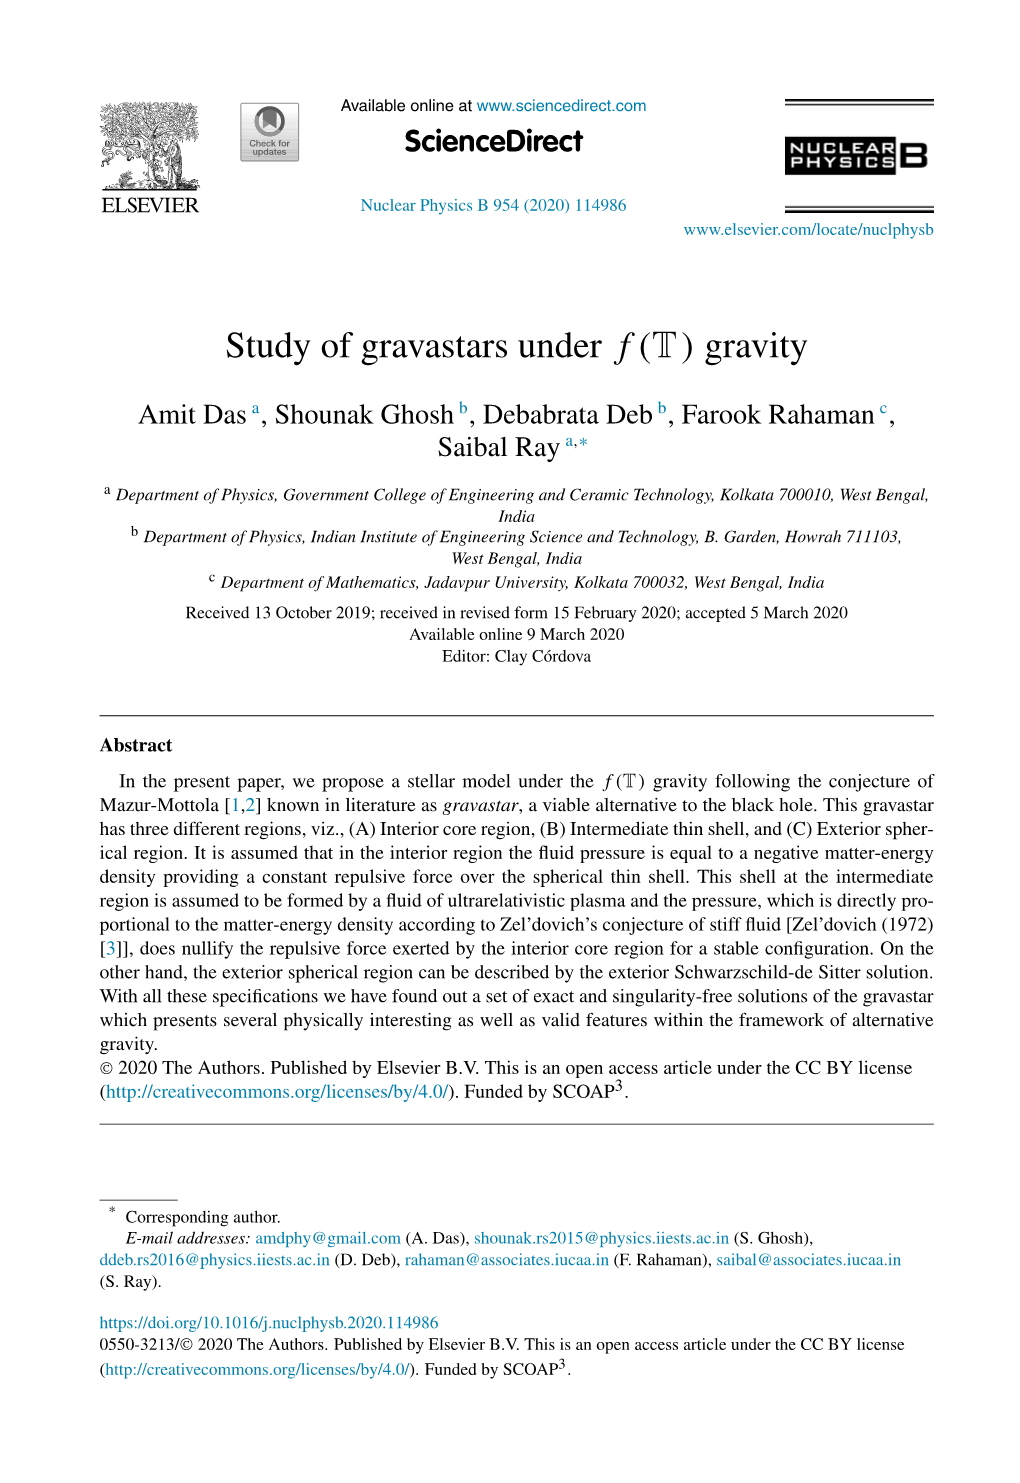 Study of Gravastars Under F(T) Gravity